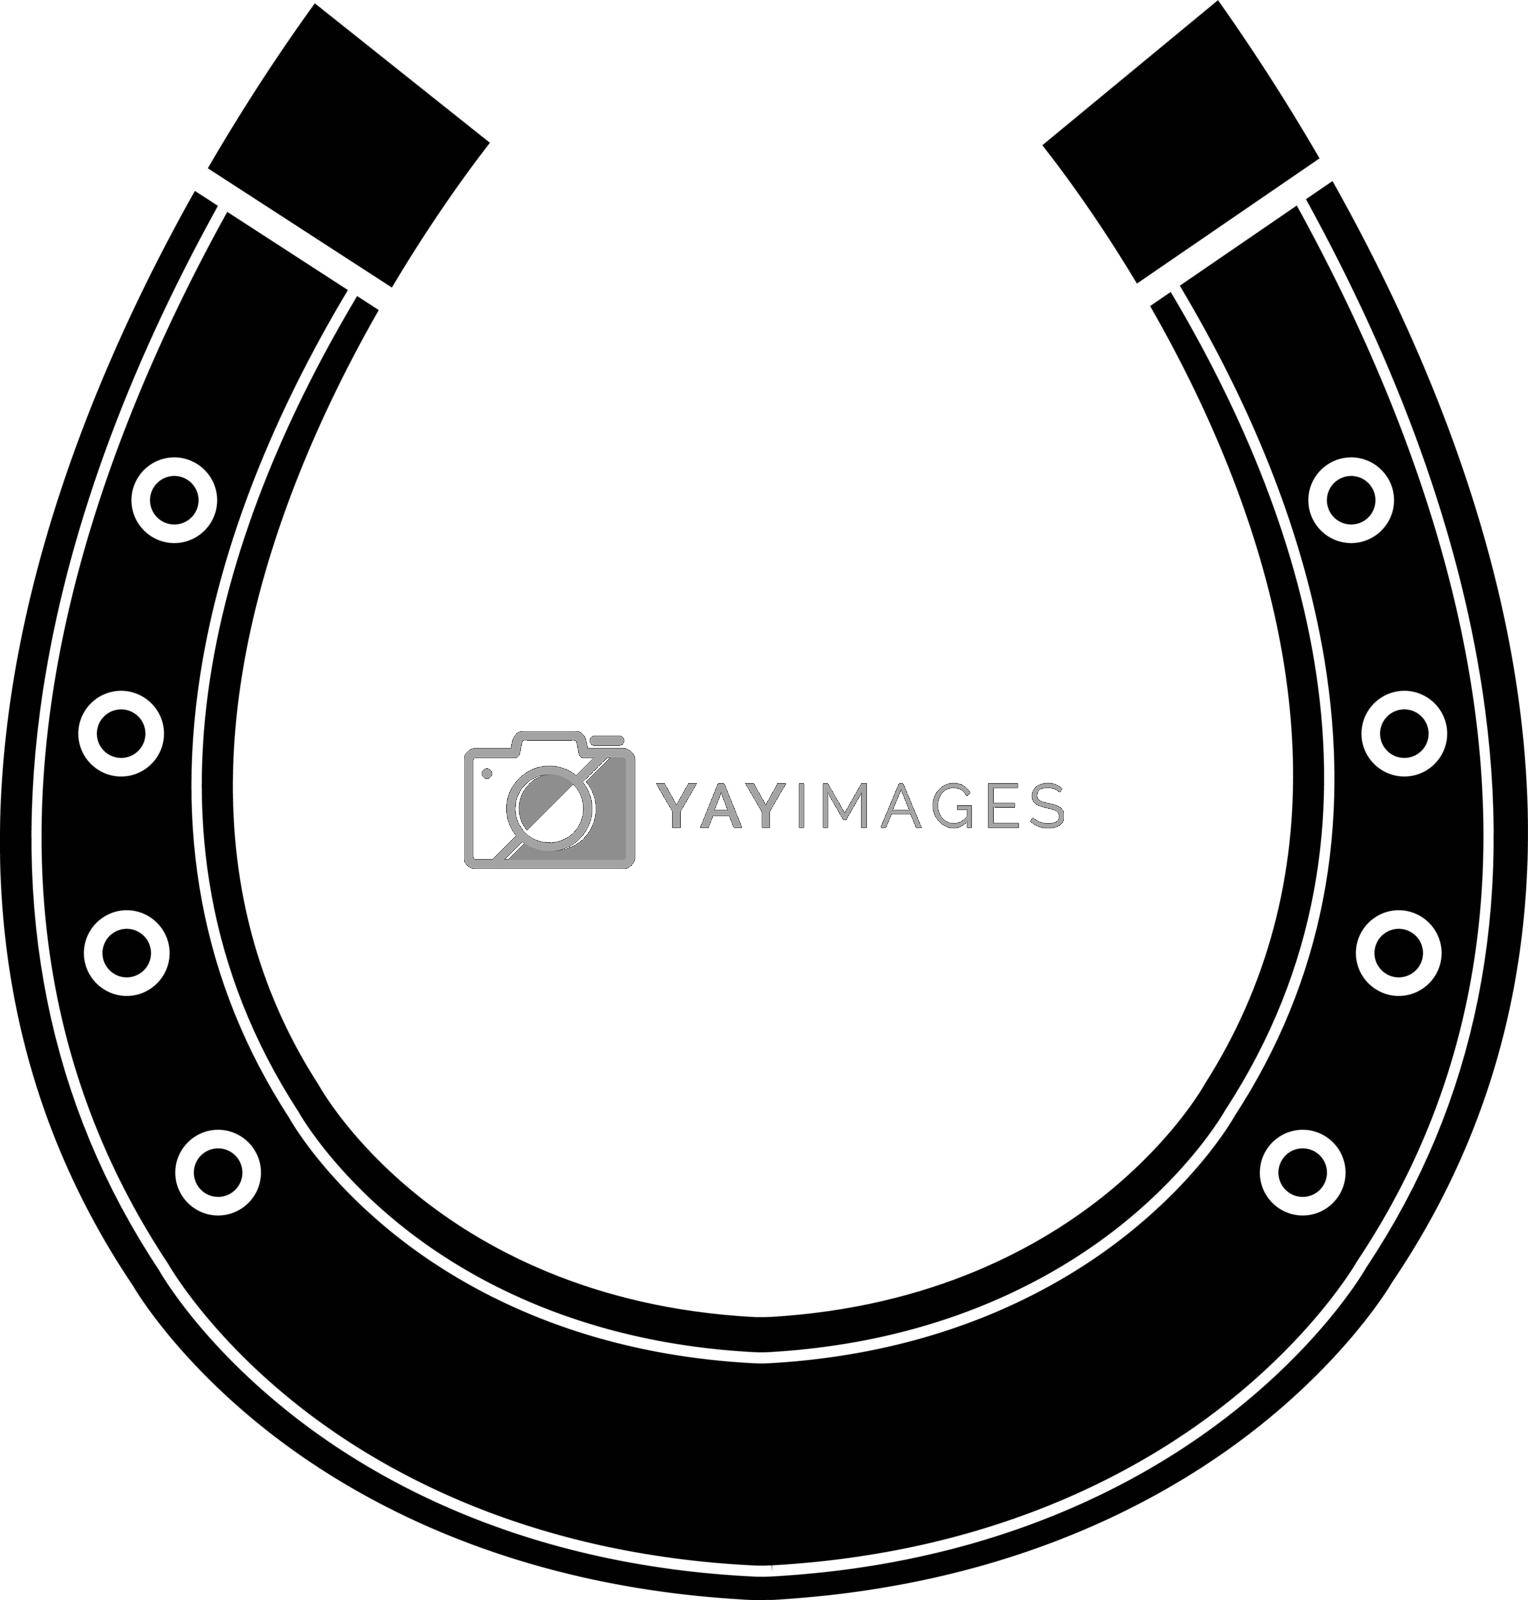 Royalty free image of Horseshoe icon by bsd